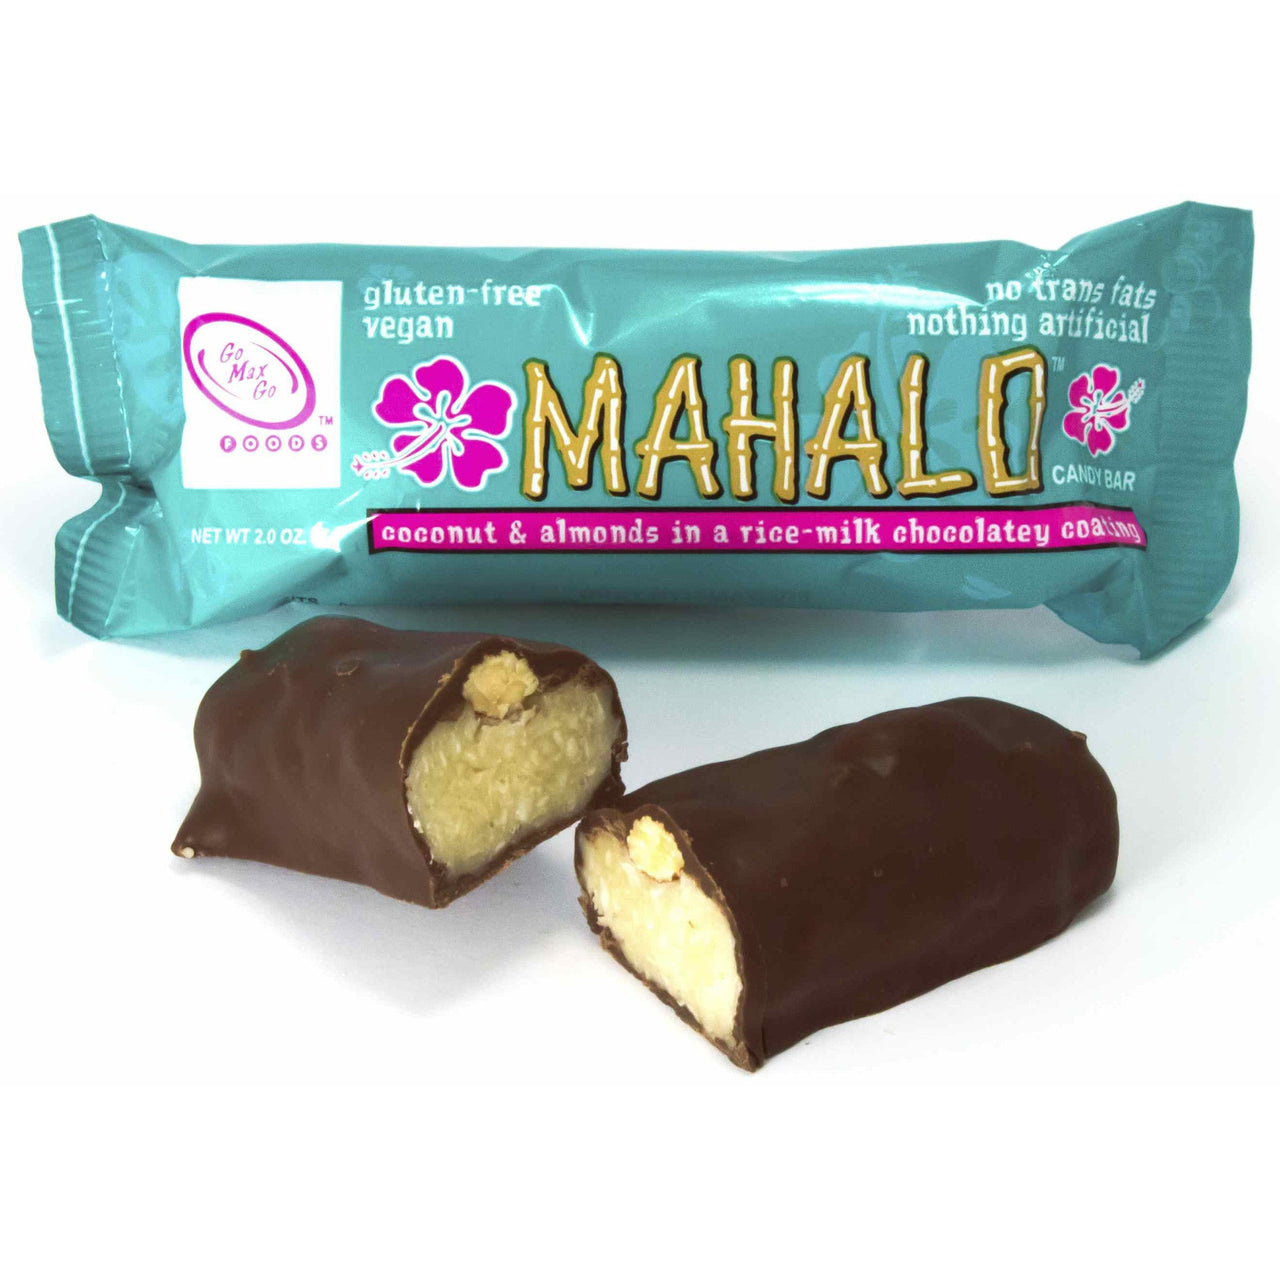 Go Max Go Mahalo Vegan Chocolate Candy Bar